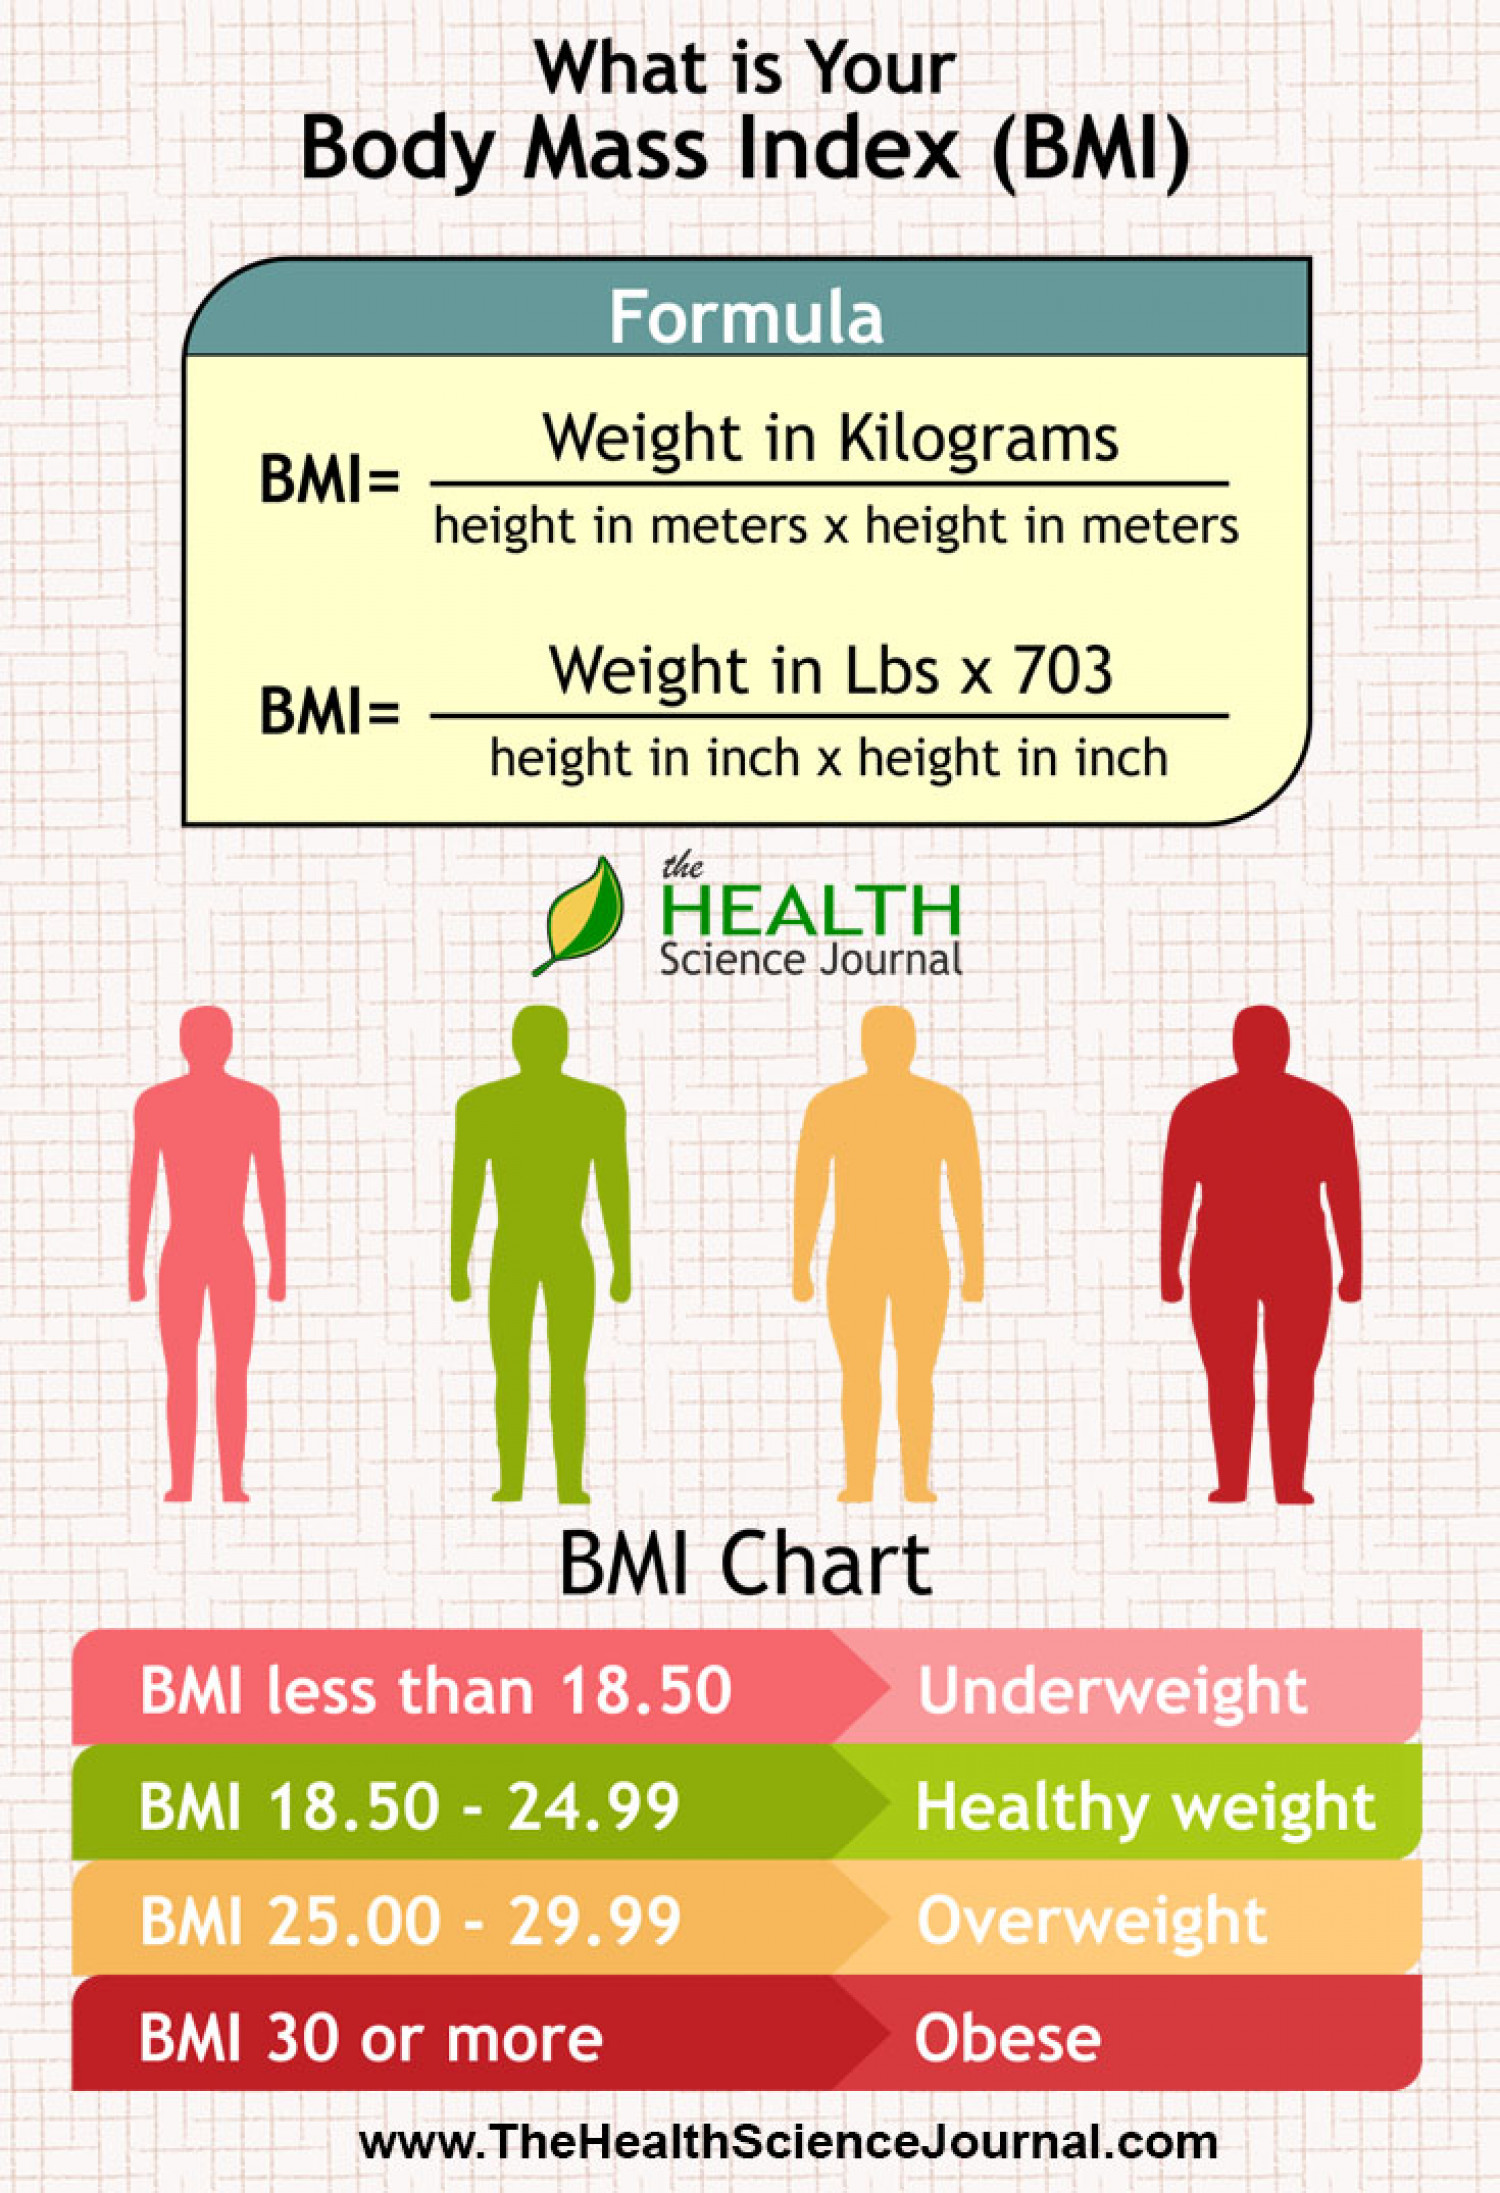 Body-Mass-Index